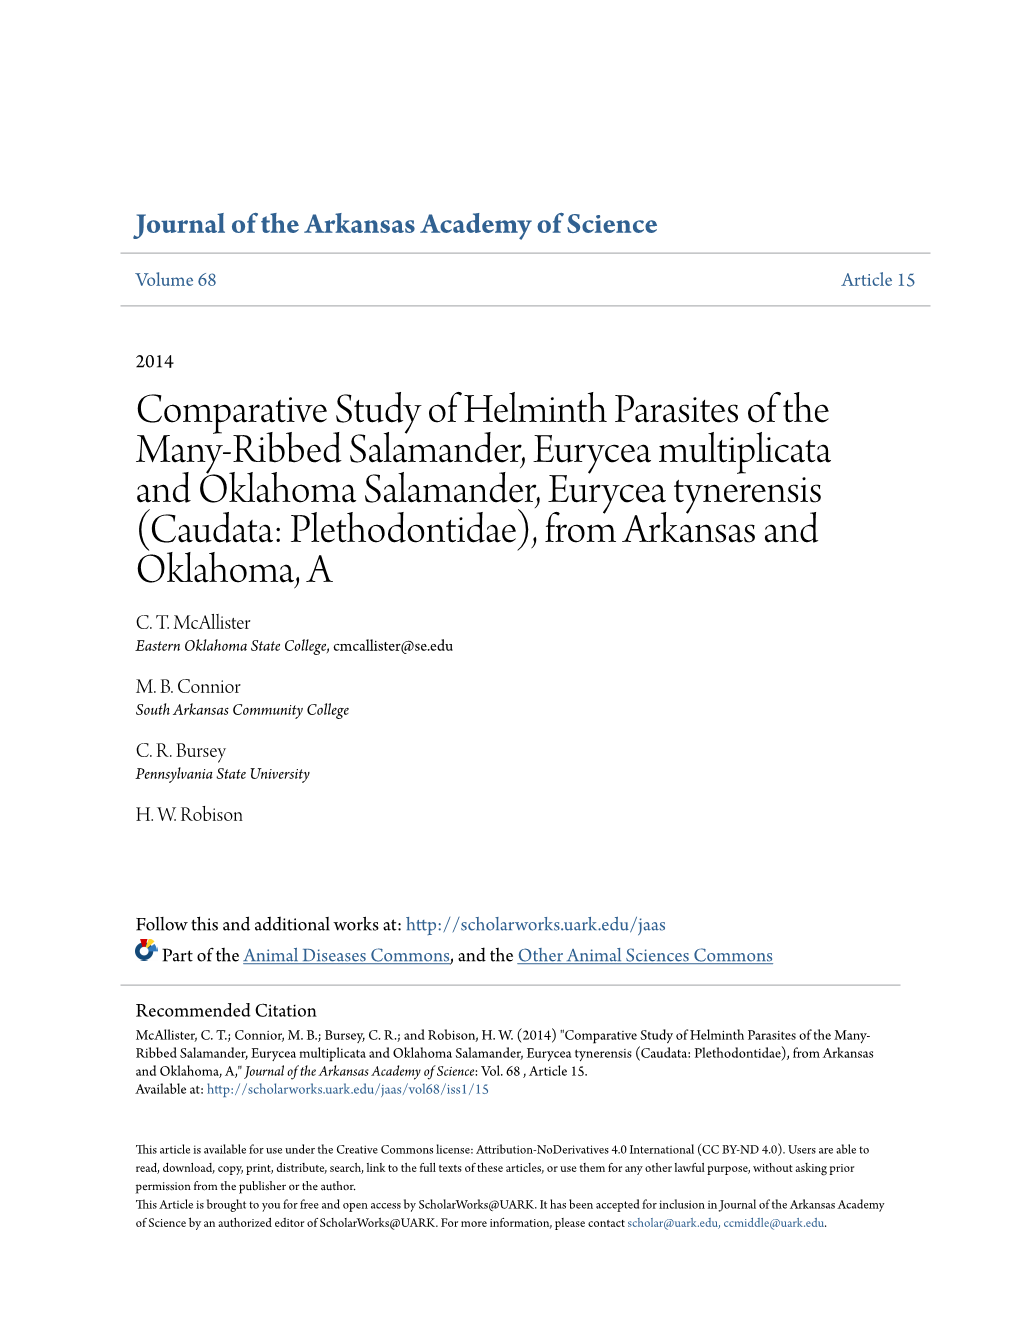 Comparative Study of Helminth Parasites of the Many-Ribbed Salamander, Eurycea Multiplicata and Oklahoma Salamander, Eurycea